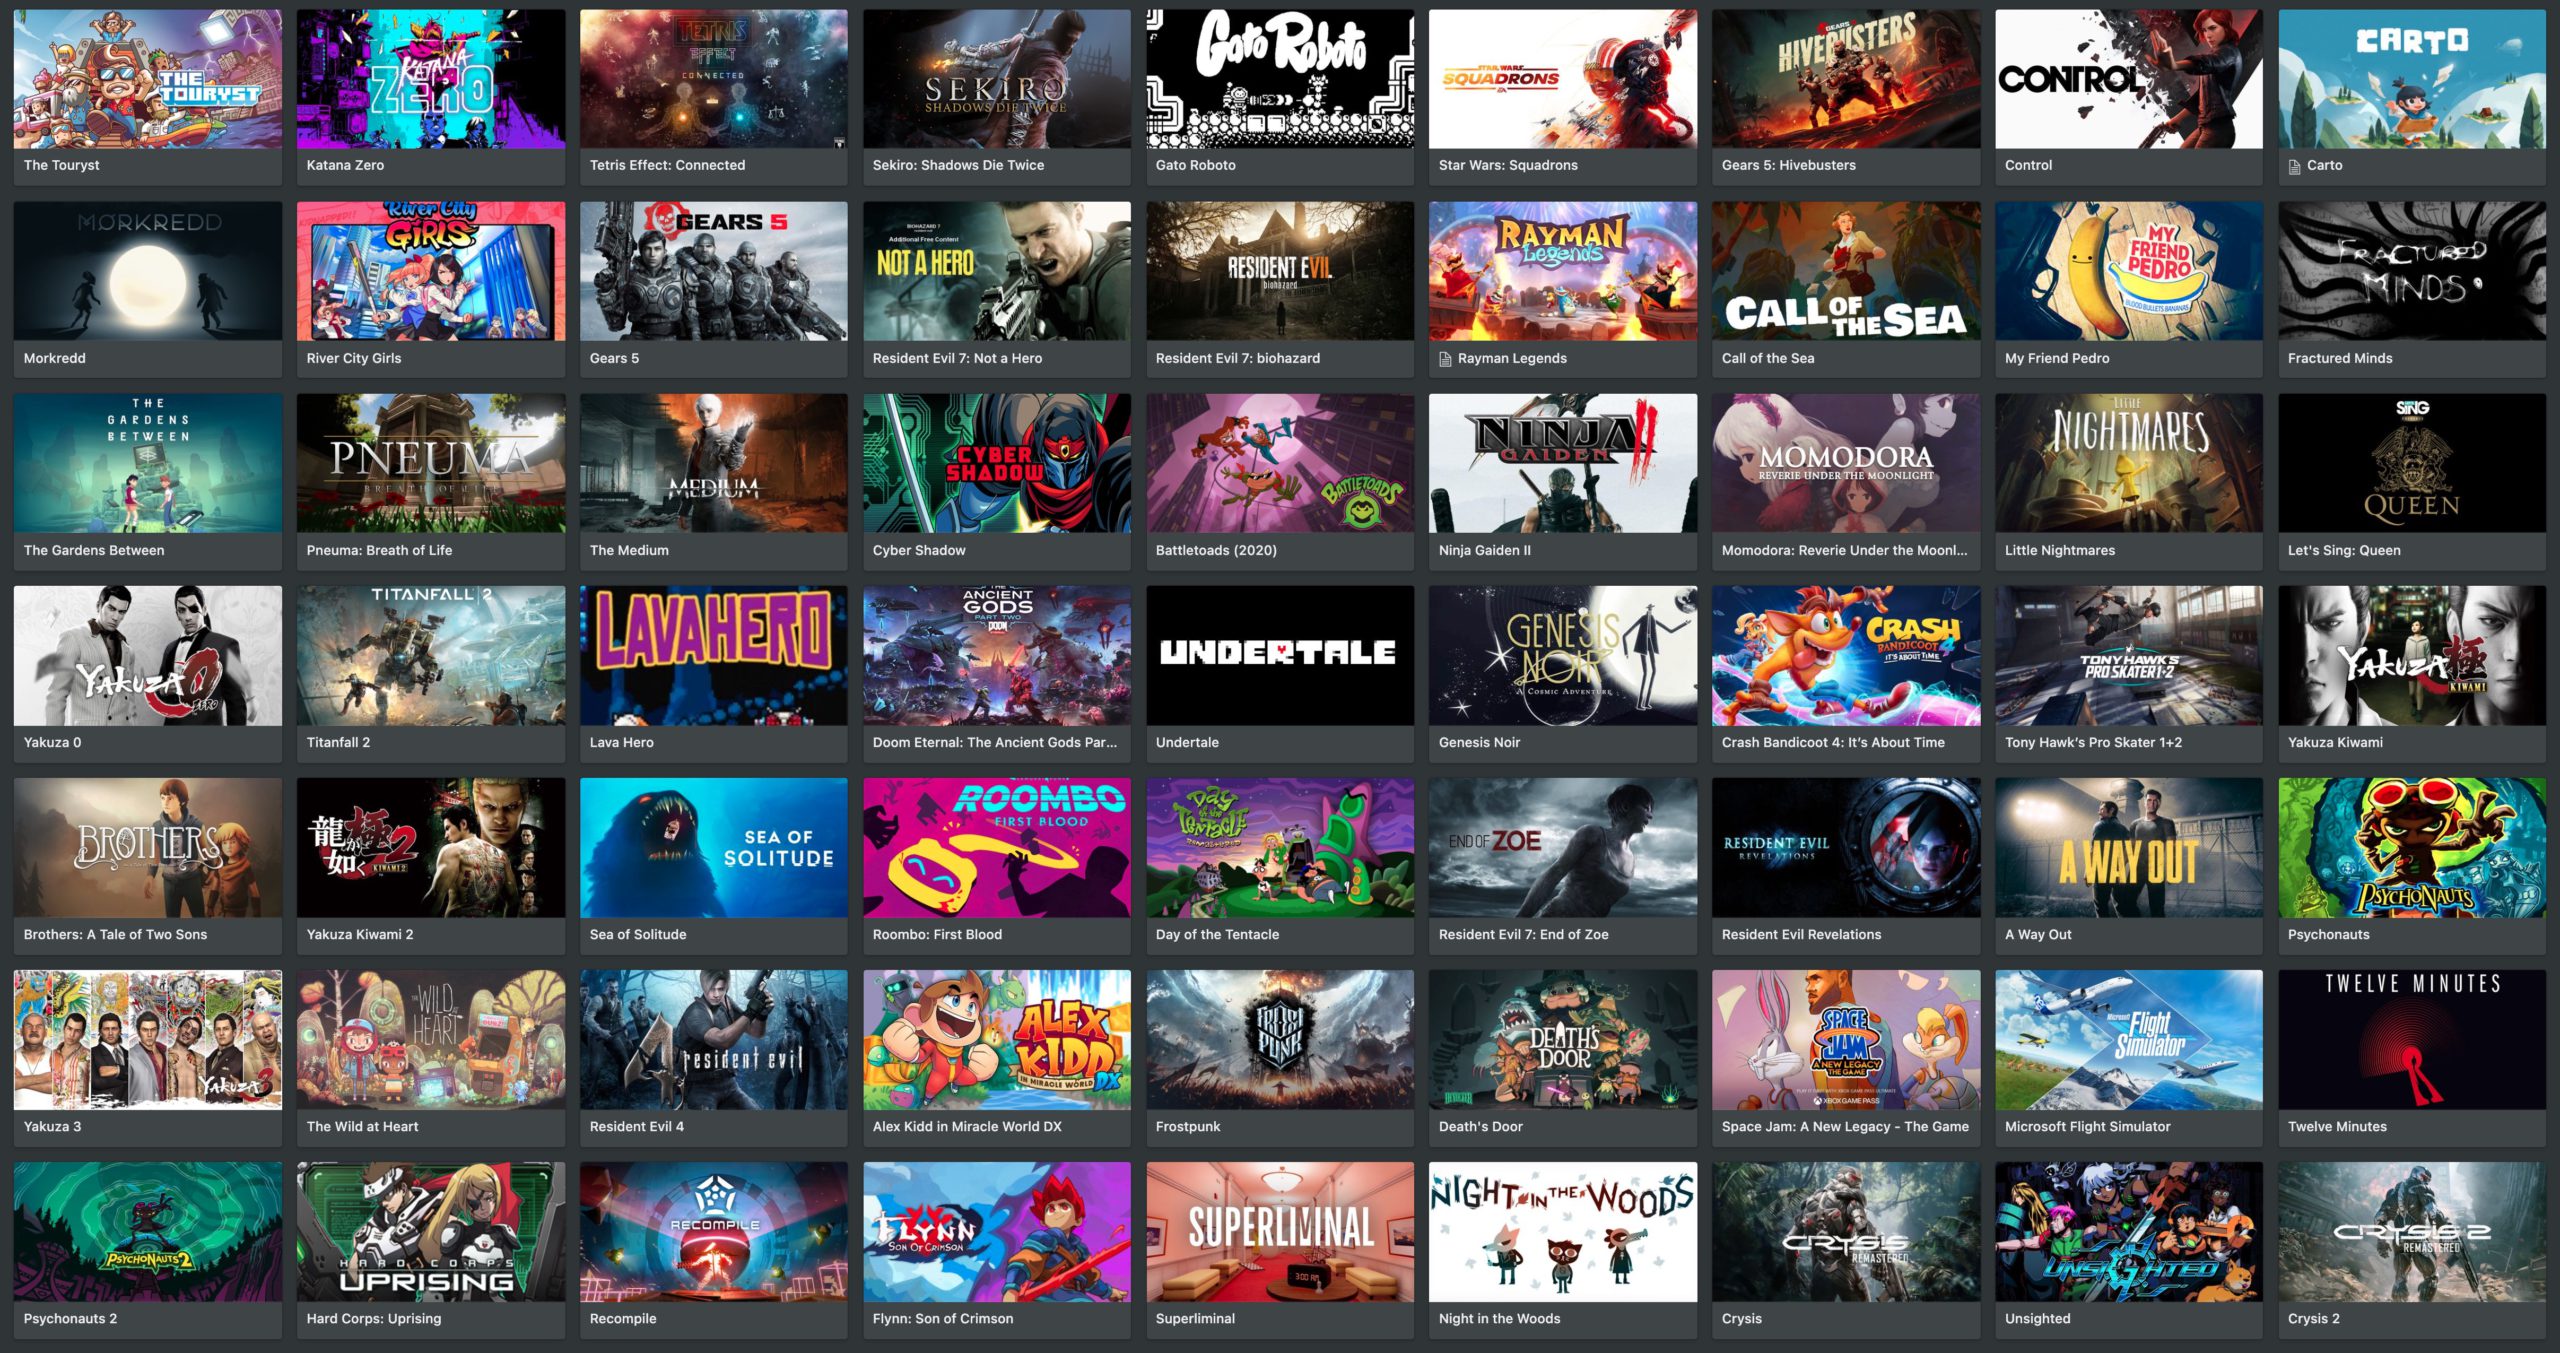 Jogos da Xbox Series X, incluindo todos os exclusivos, first-party e outros  jogos confirmados